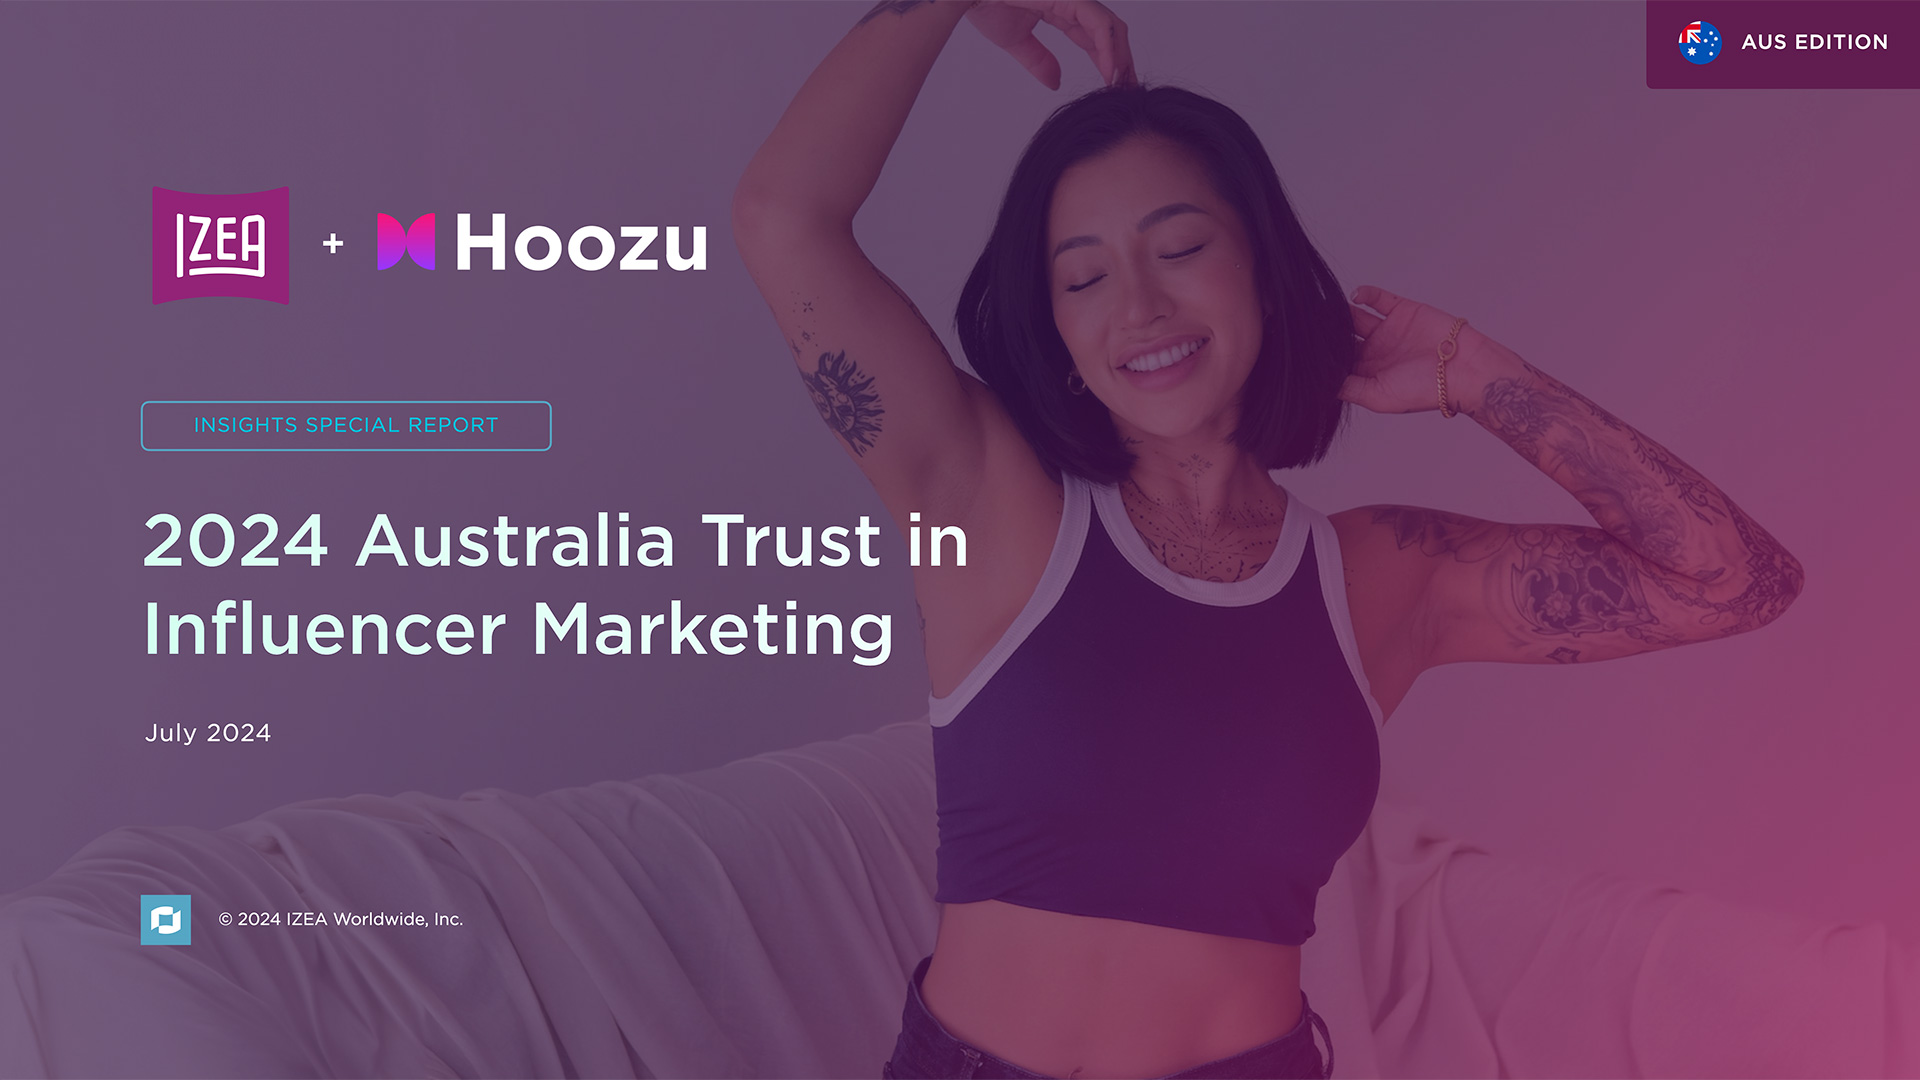 IZEA Hoozu Trust in Influencer Marketing